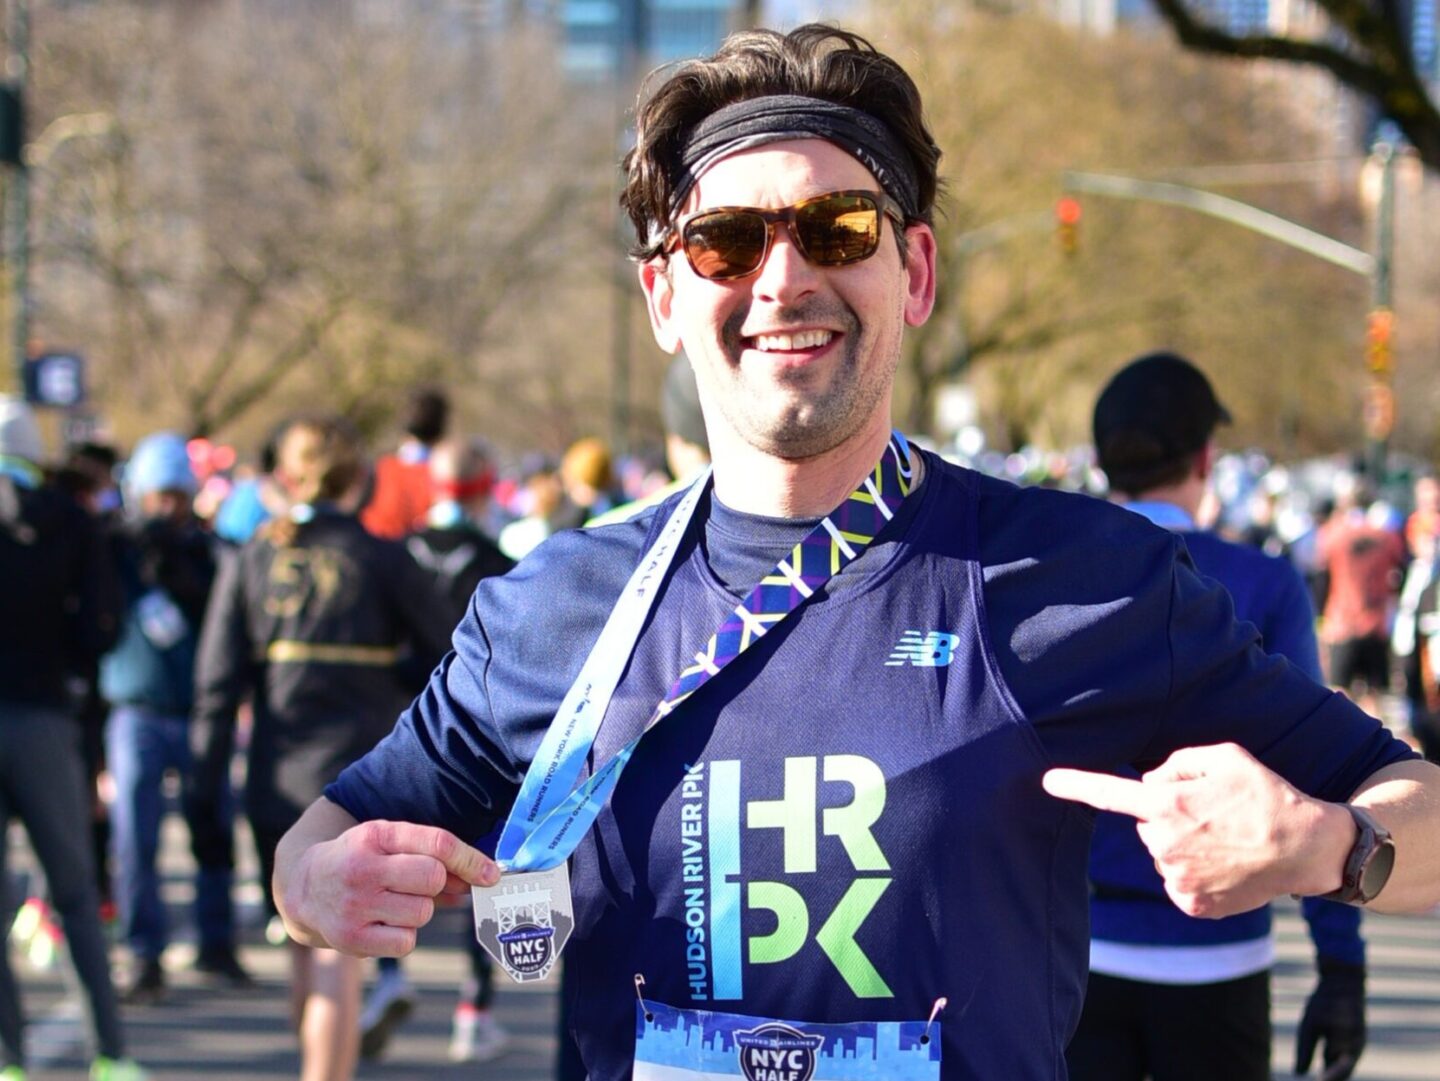 David Dougherty Jr. runs the NYC Half Marathon for Team HRPK